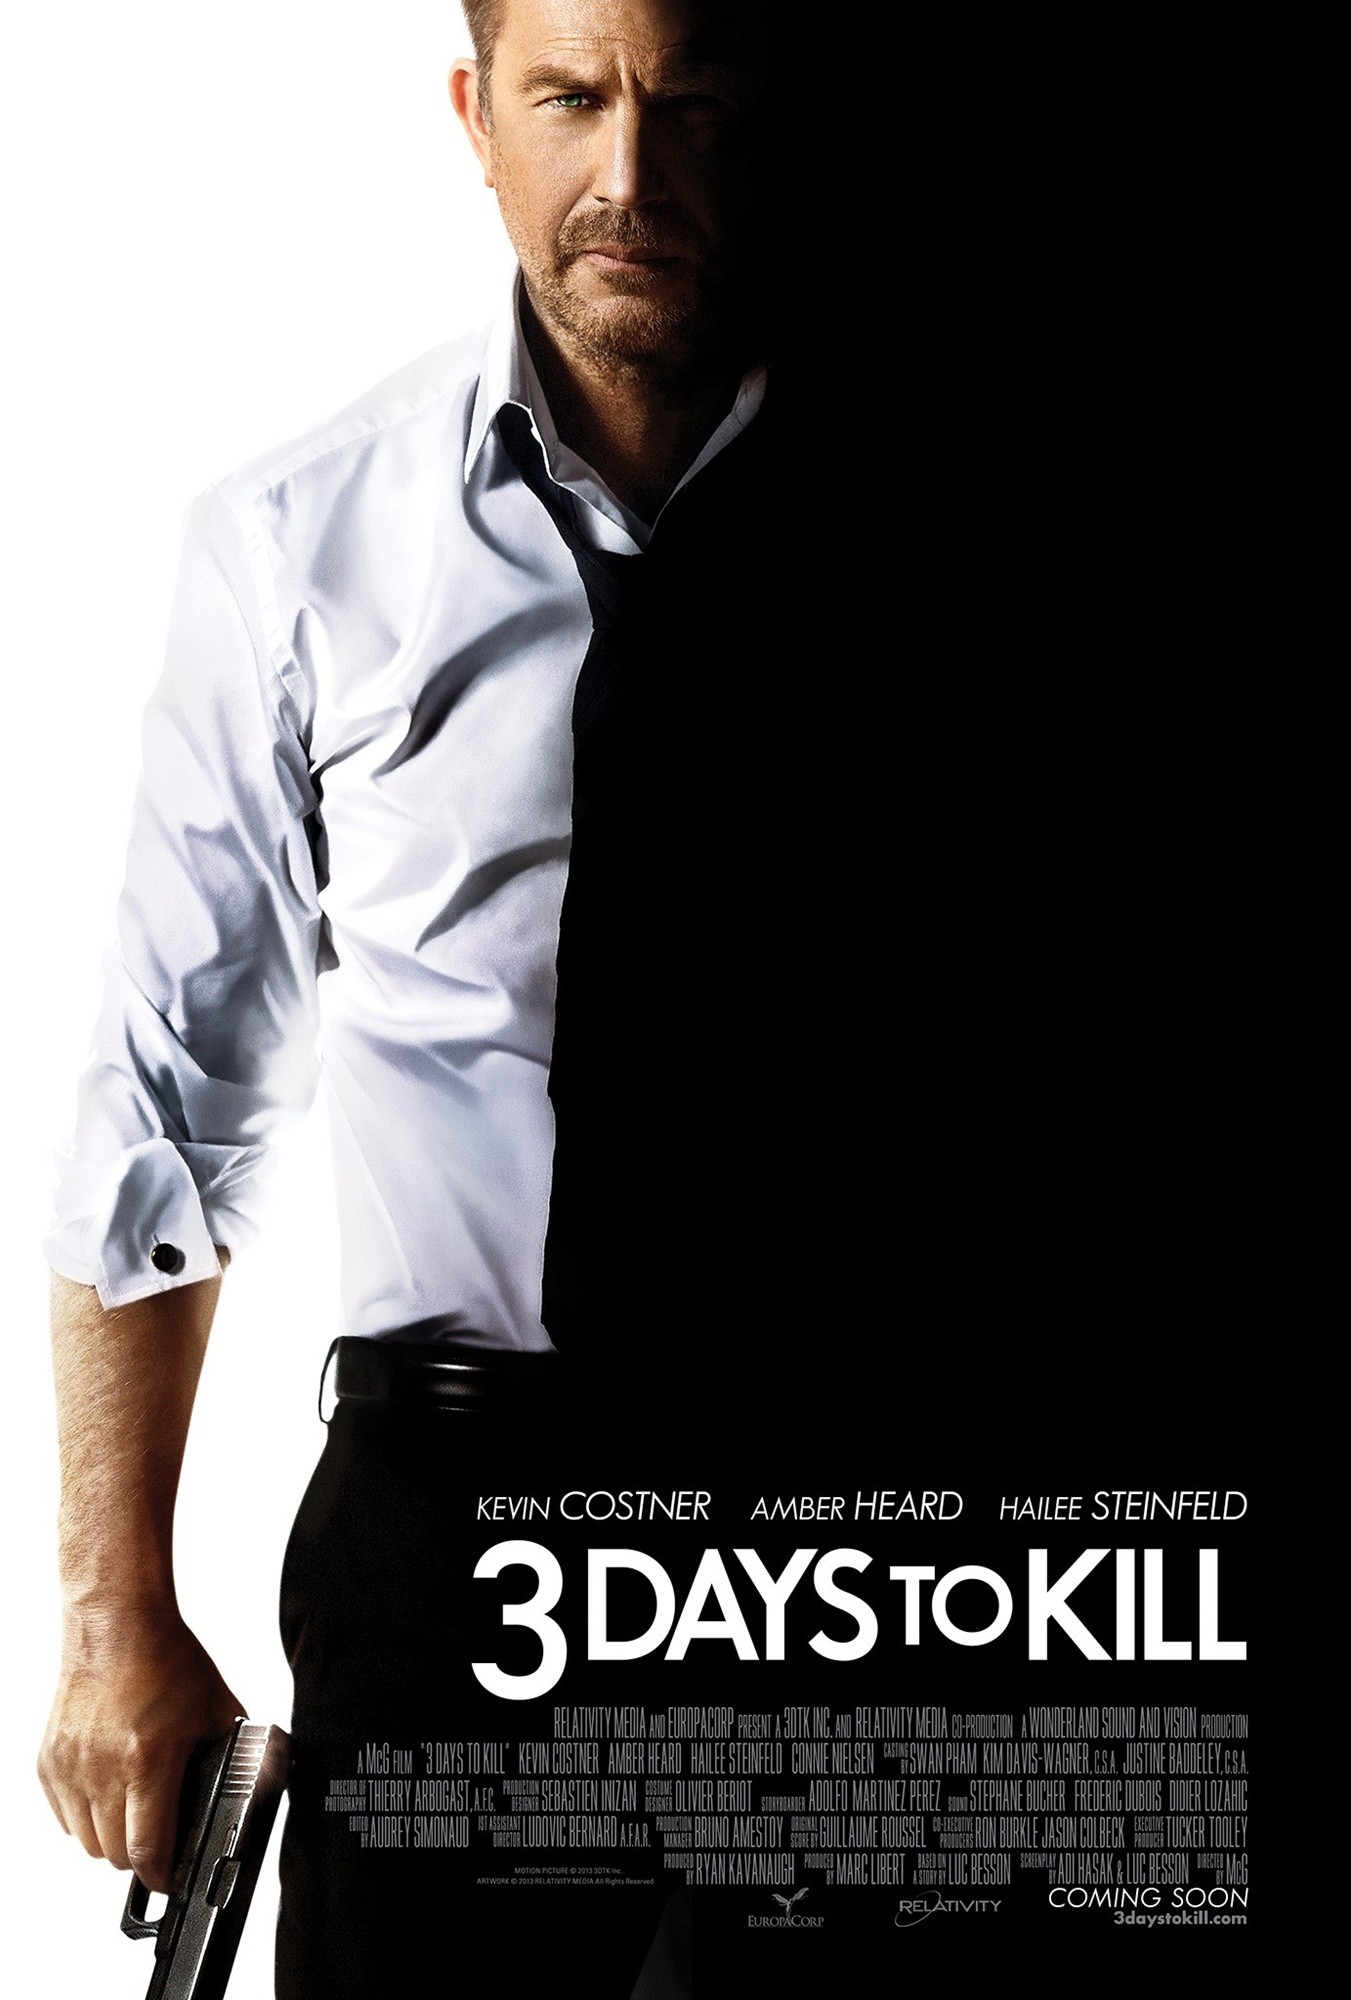 Poster of Relativity Media's 3 Days to Kill (2014)